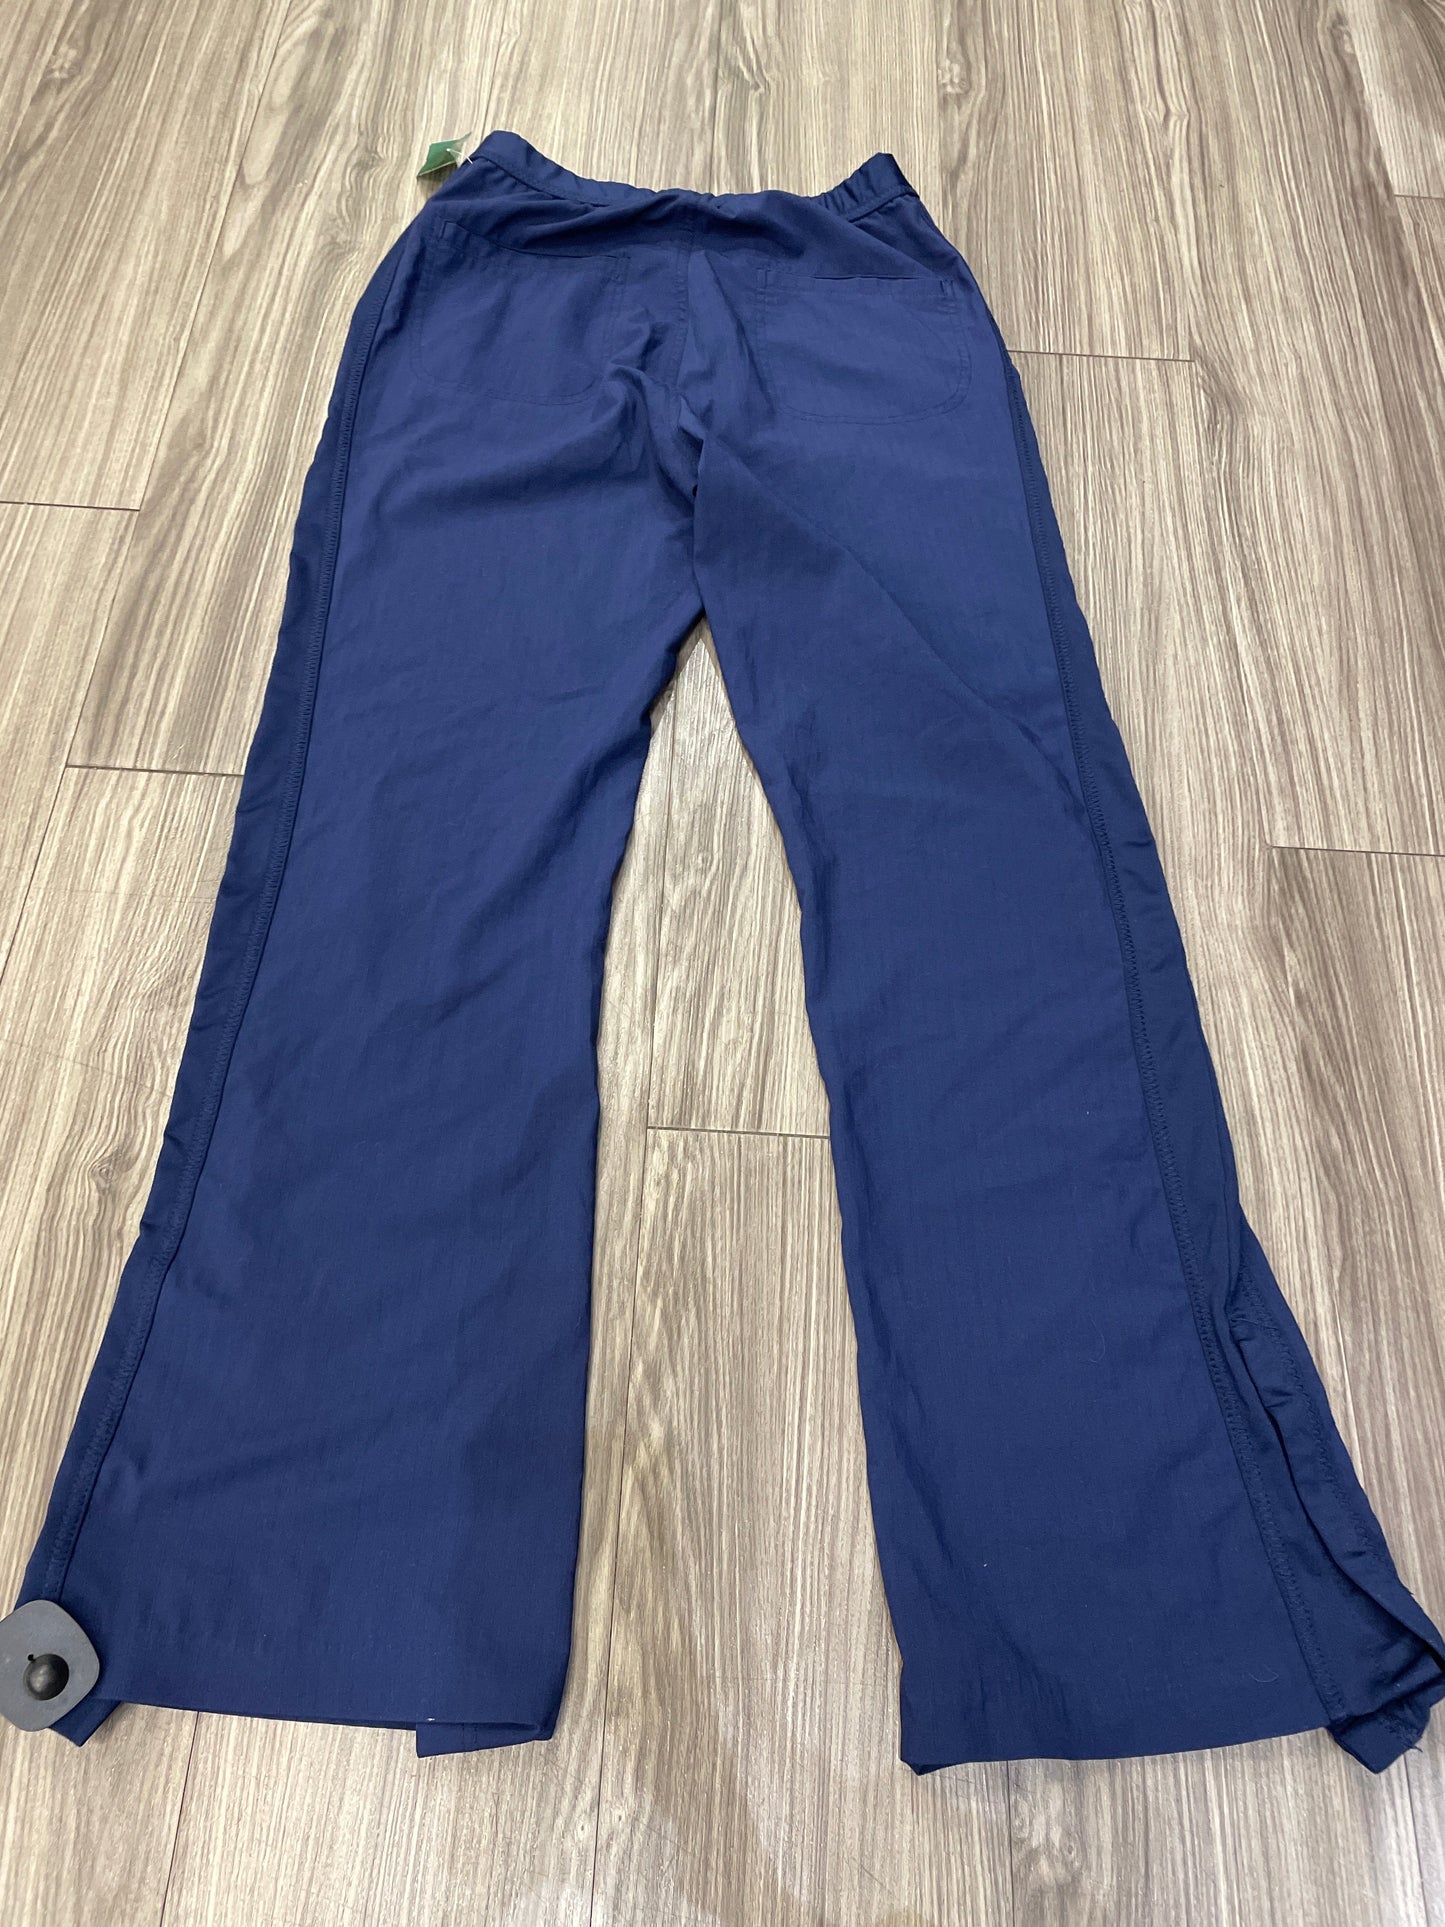 Blue Pants Cargo & Utility Cherokee, Size S